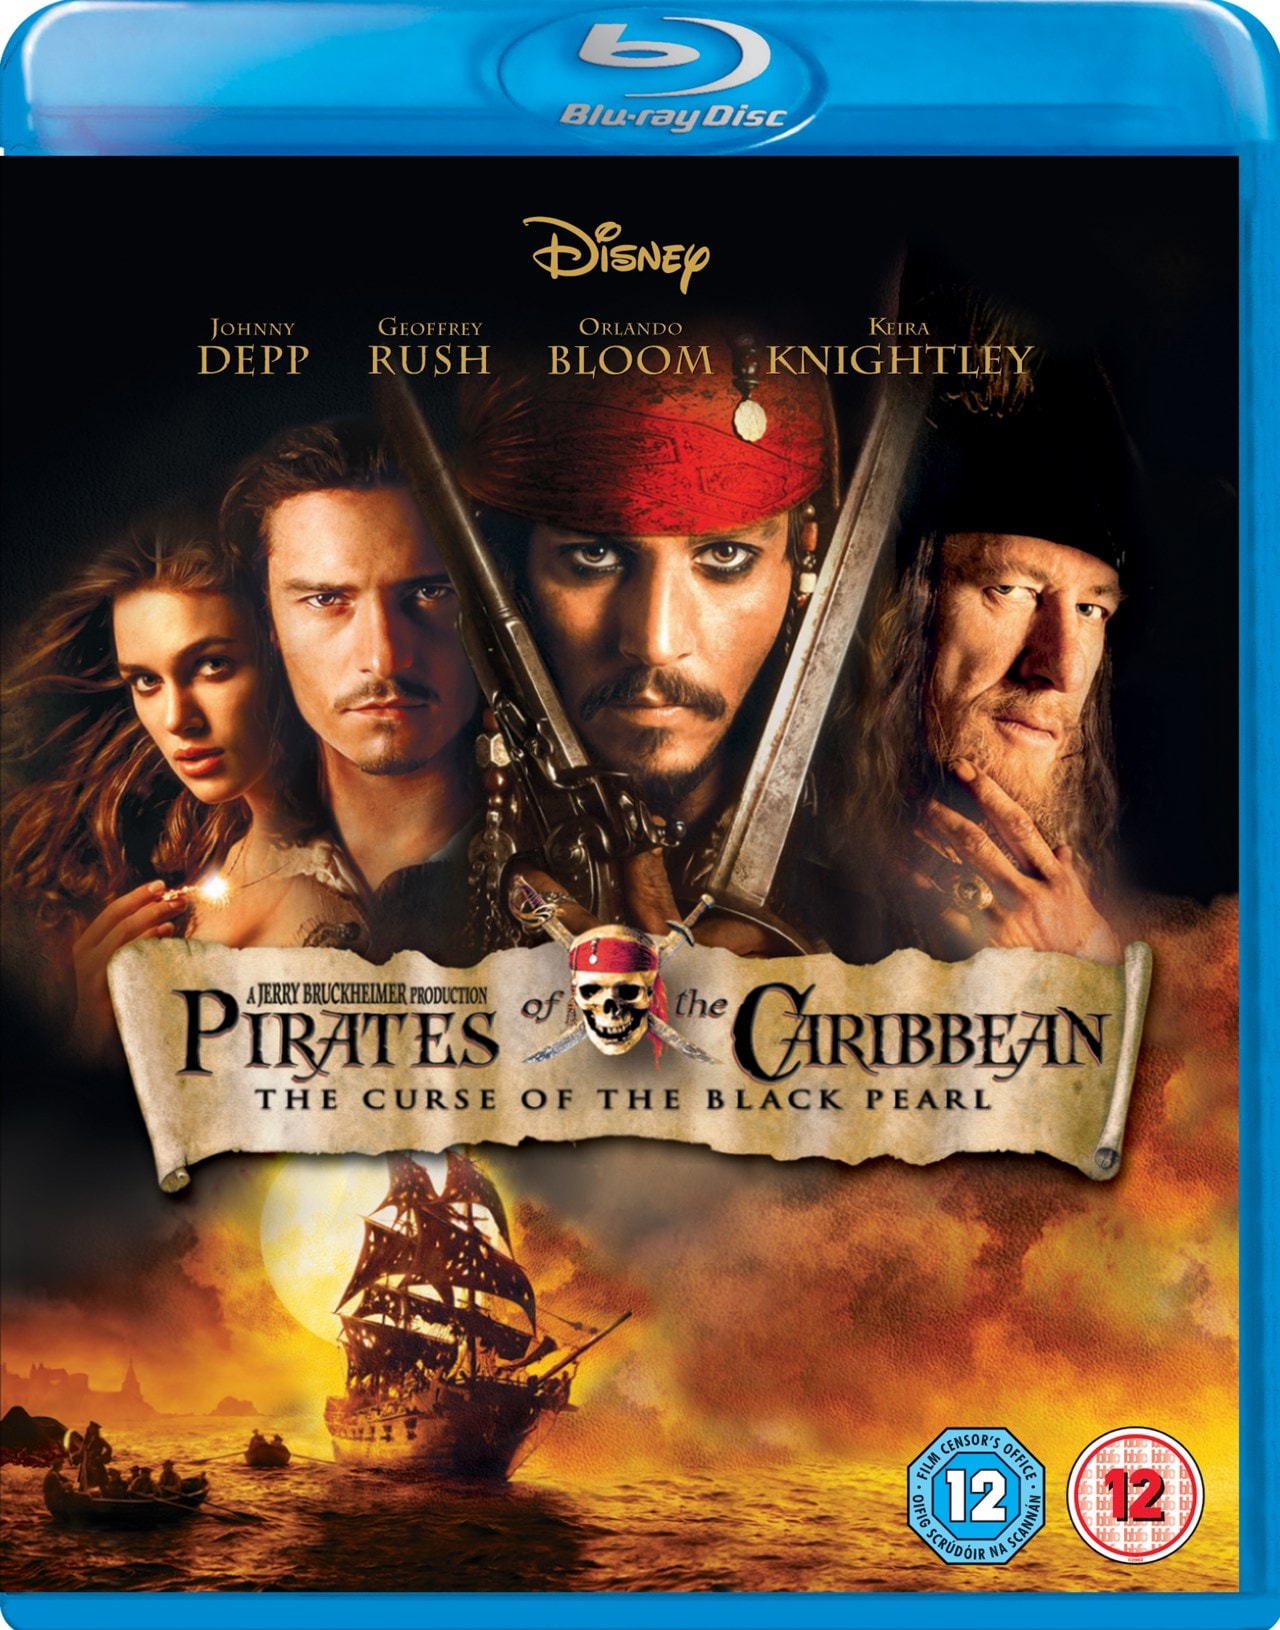 Stiahni si HD Filmy Pirati z Karibiku: Prokleti Cerne perly/Pirates of the Caribbean: The Curse of the Black Pearl  (2003)(CZ/EN)[1080p] = CSFD 84%